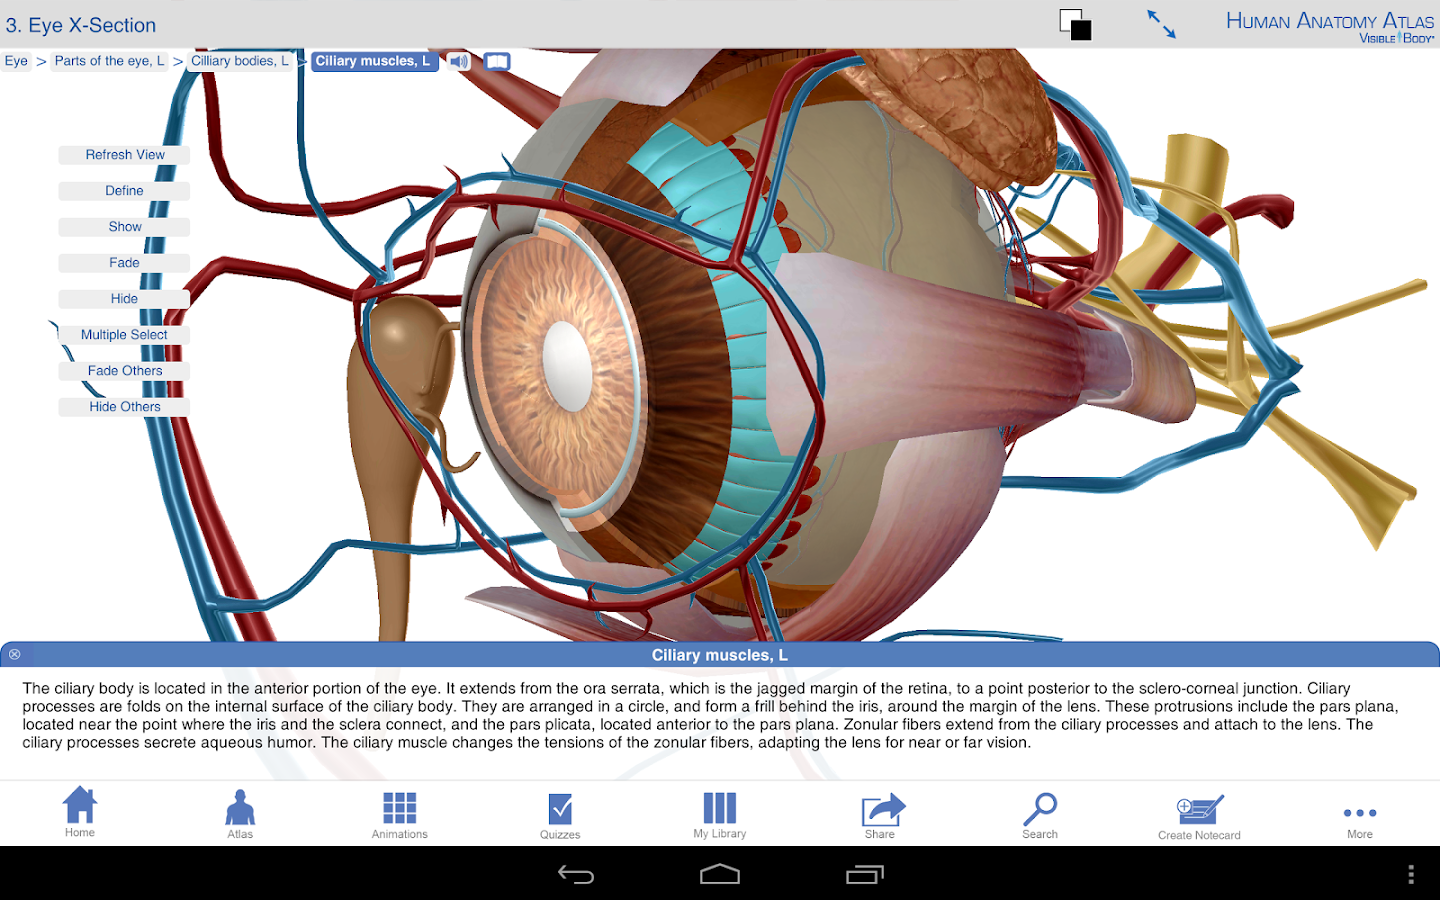 Human Anatomy Atlas - screenshot